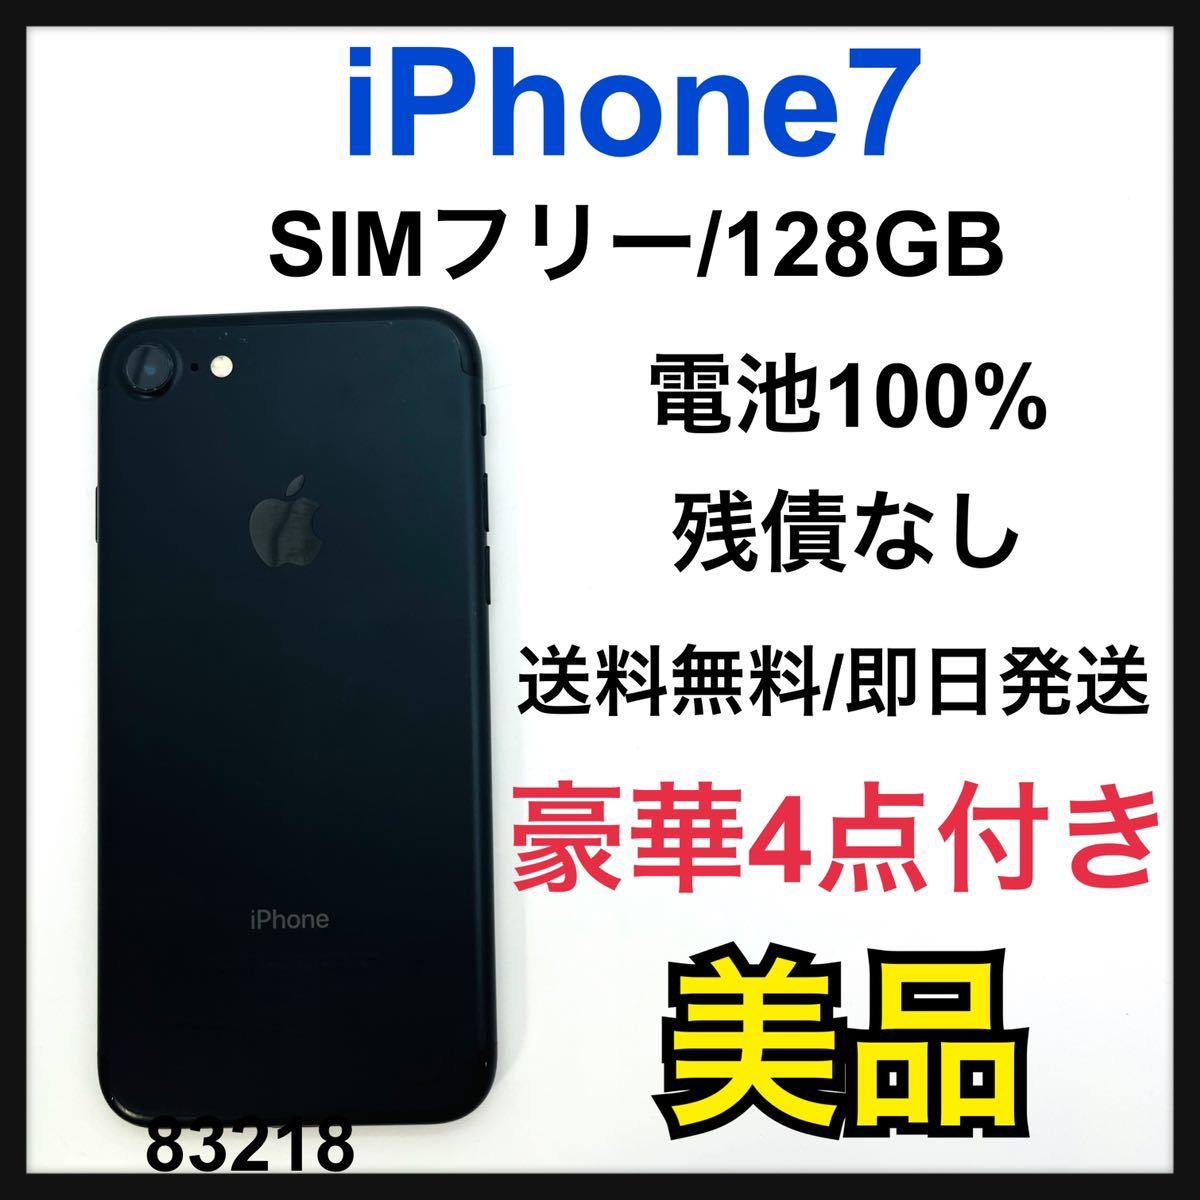 B 100% iPhone 8 Space Gray 256 GB SIMフリー-